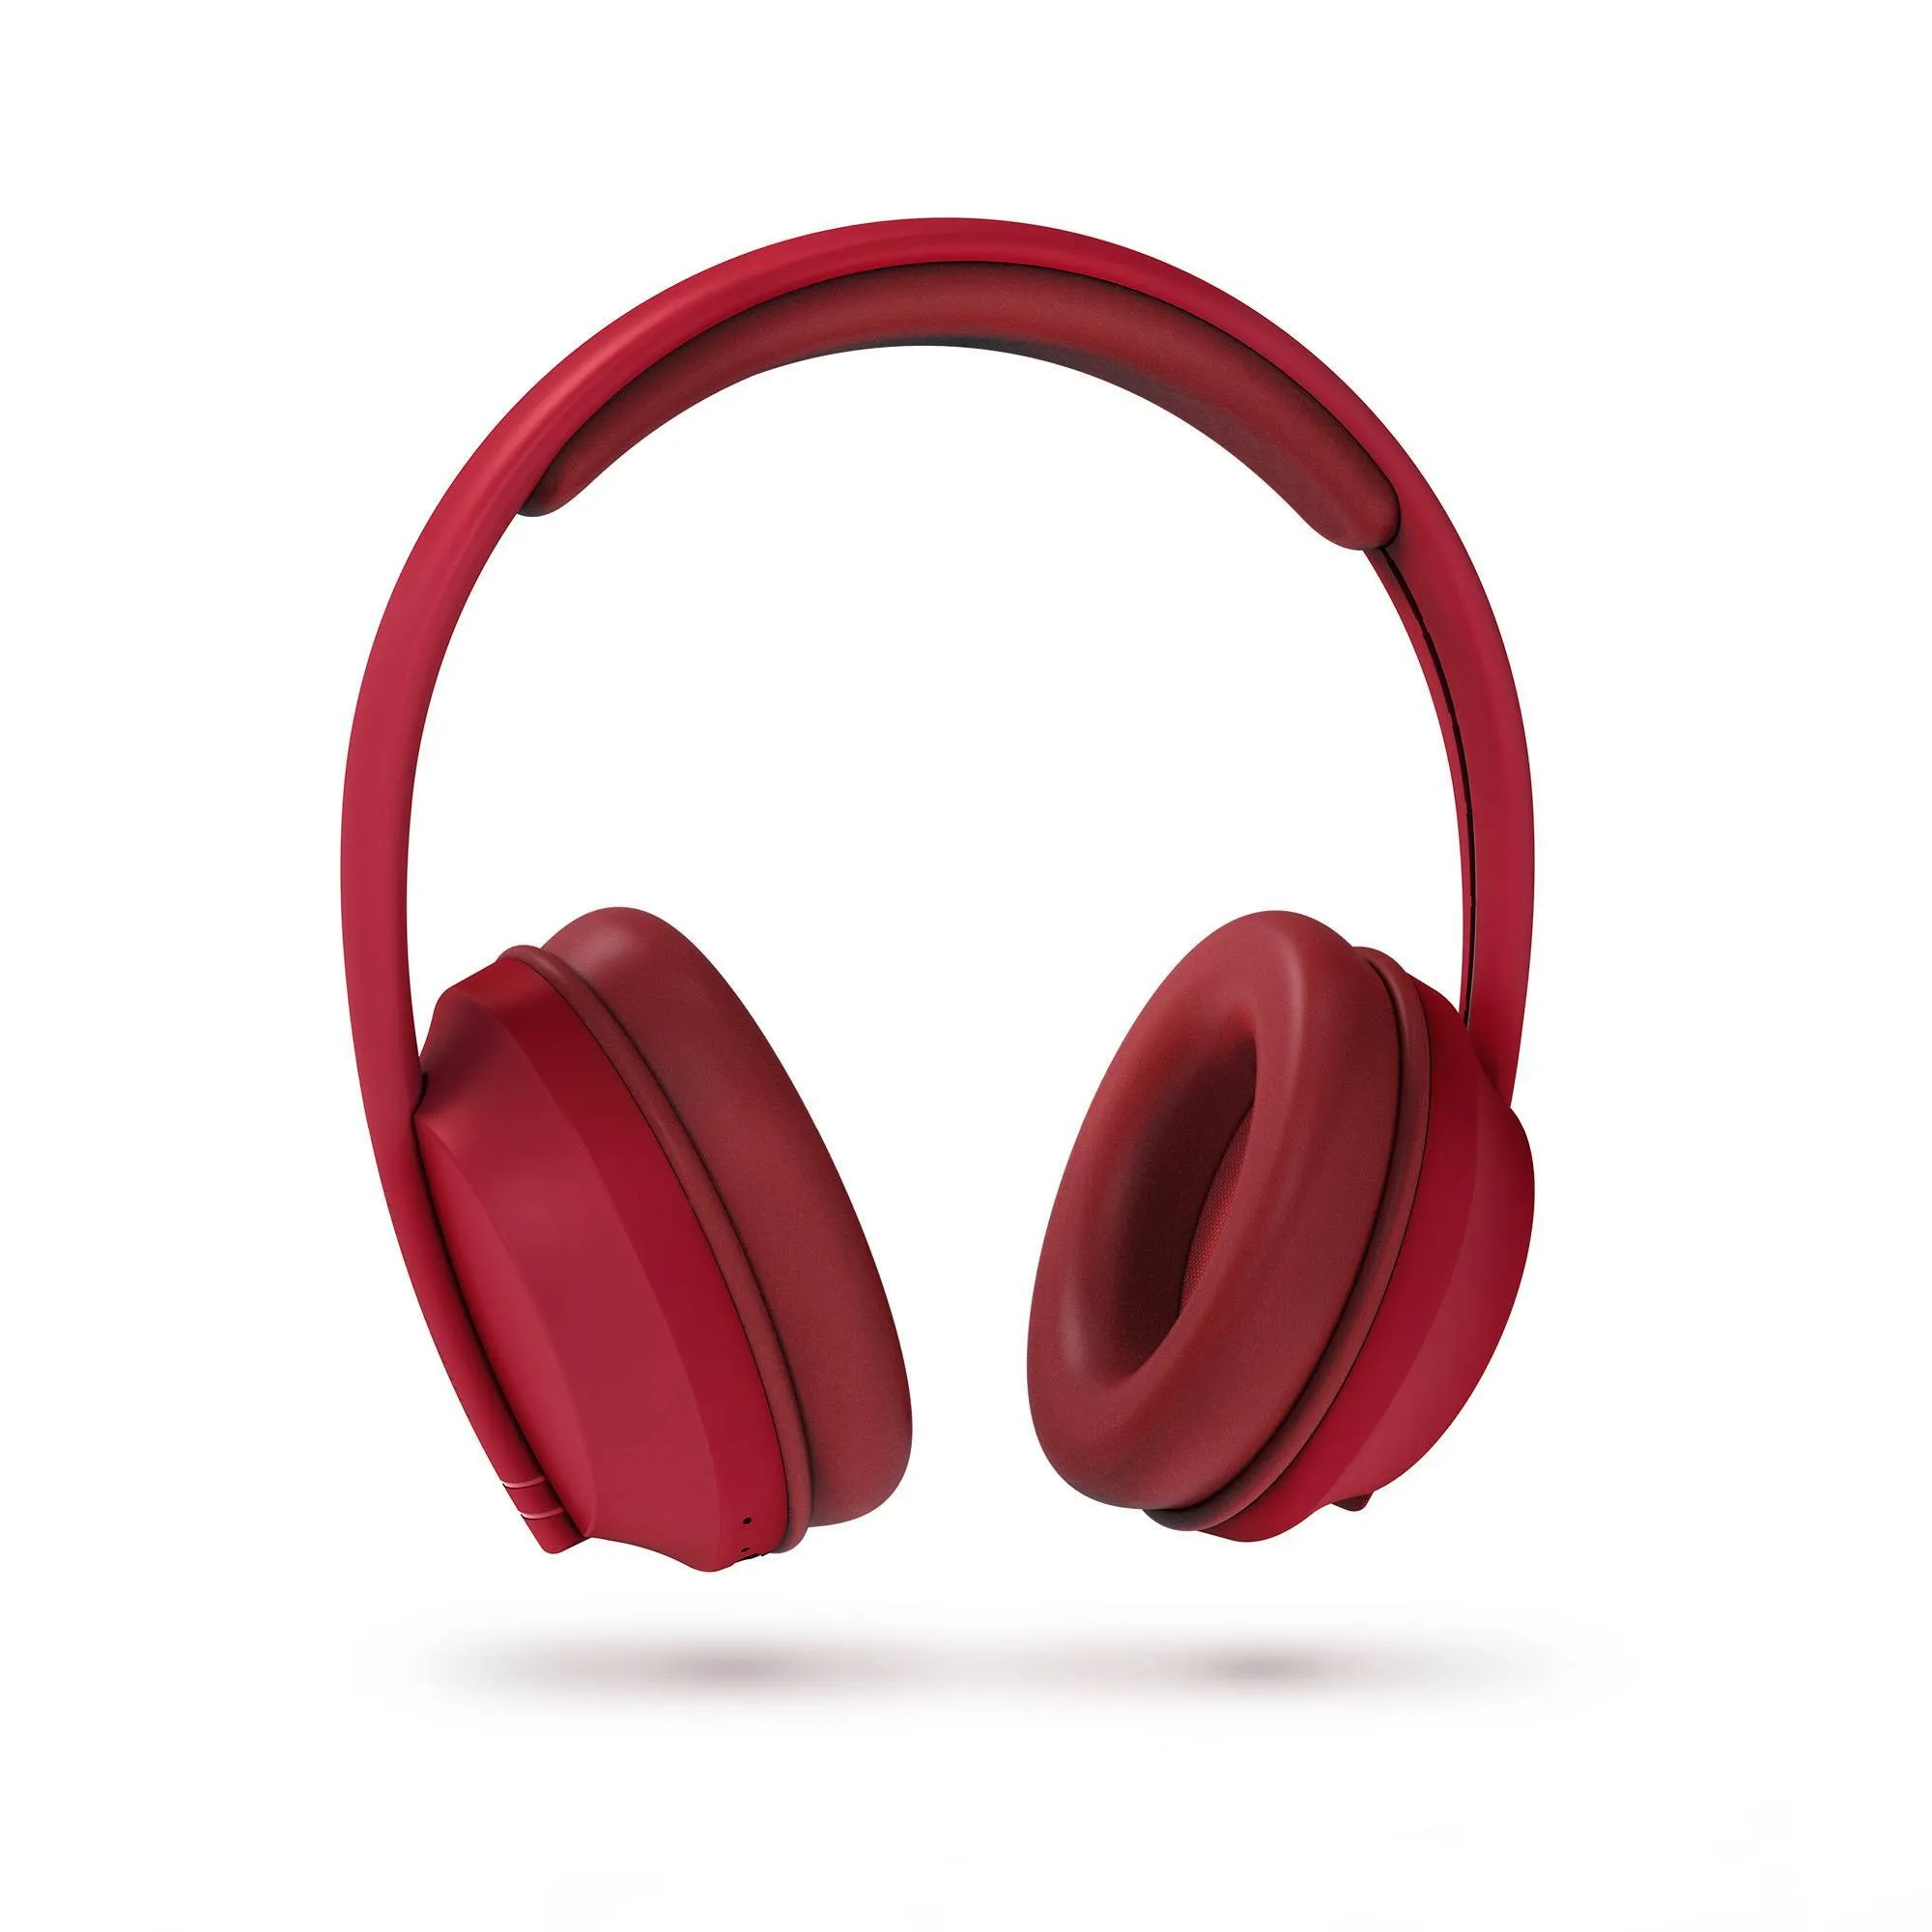 Energy Sistem's Hoshi ECO Bluetooth headphones